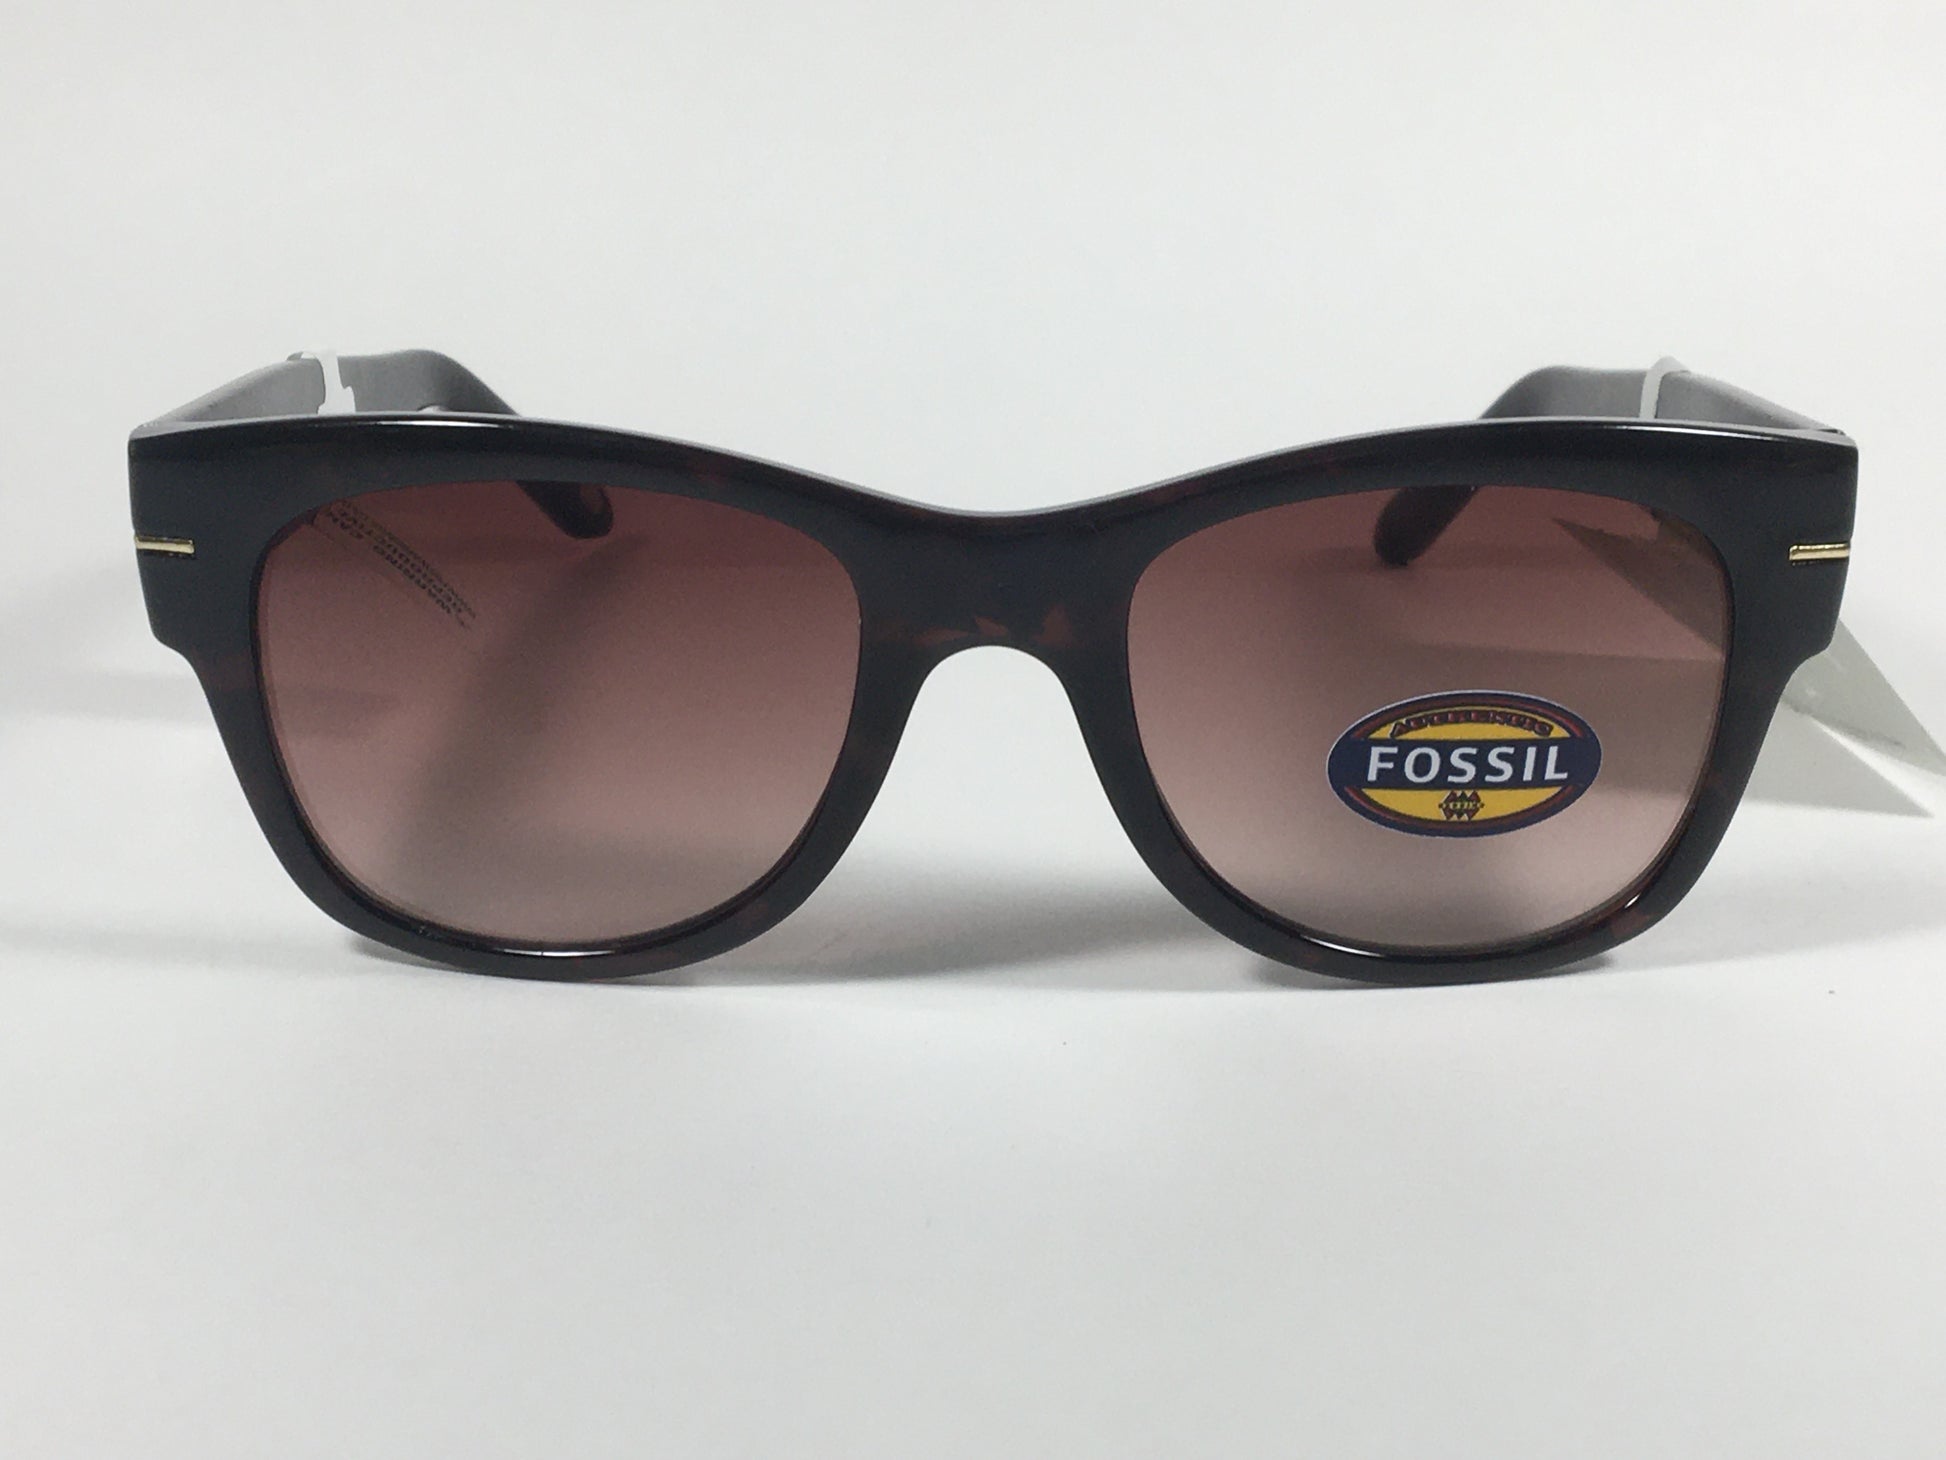 Fossil Square Sunglasses Dark Tortoise Frame Brown Gradient Lens FW17 - Sunglasses